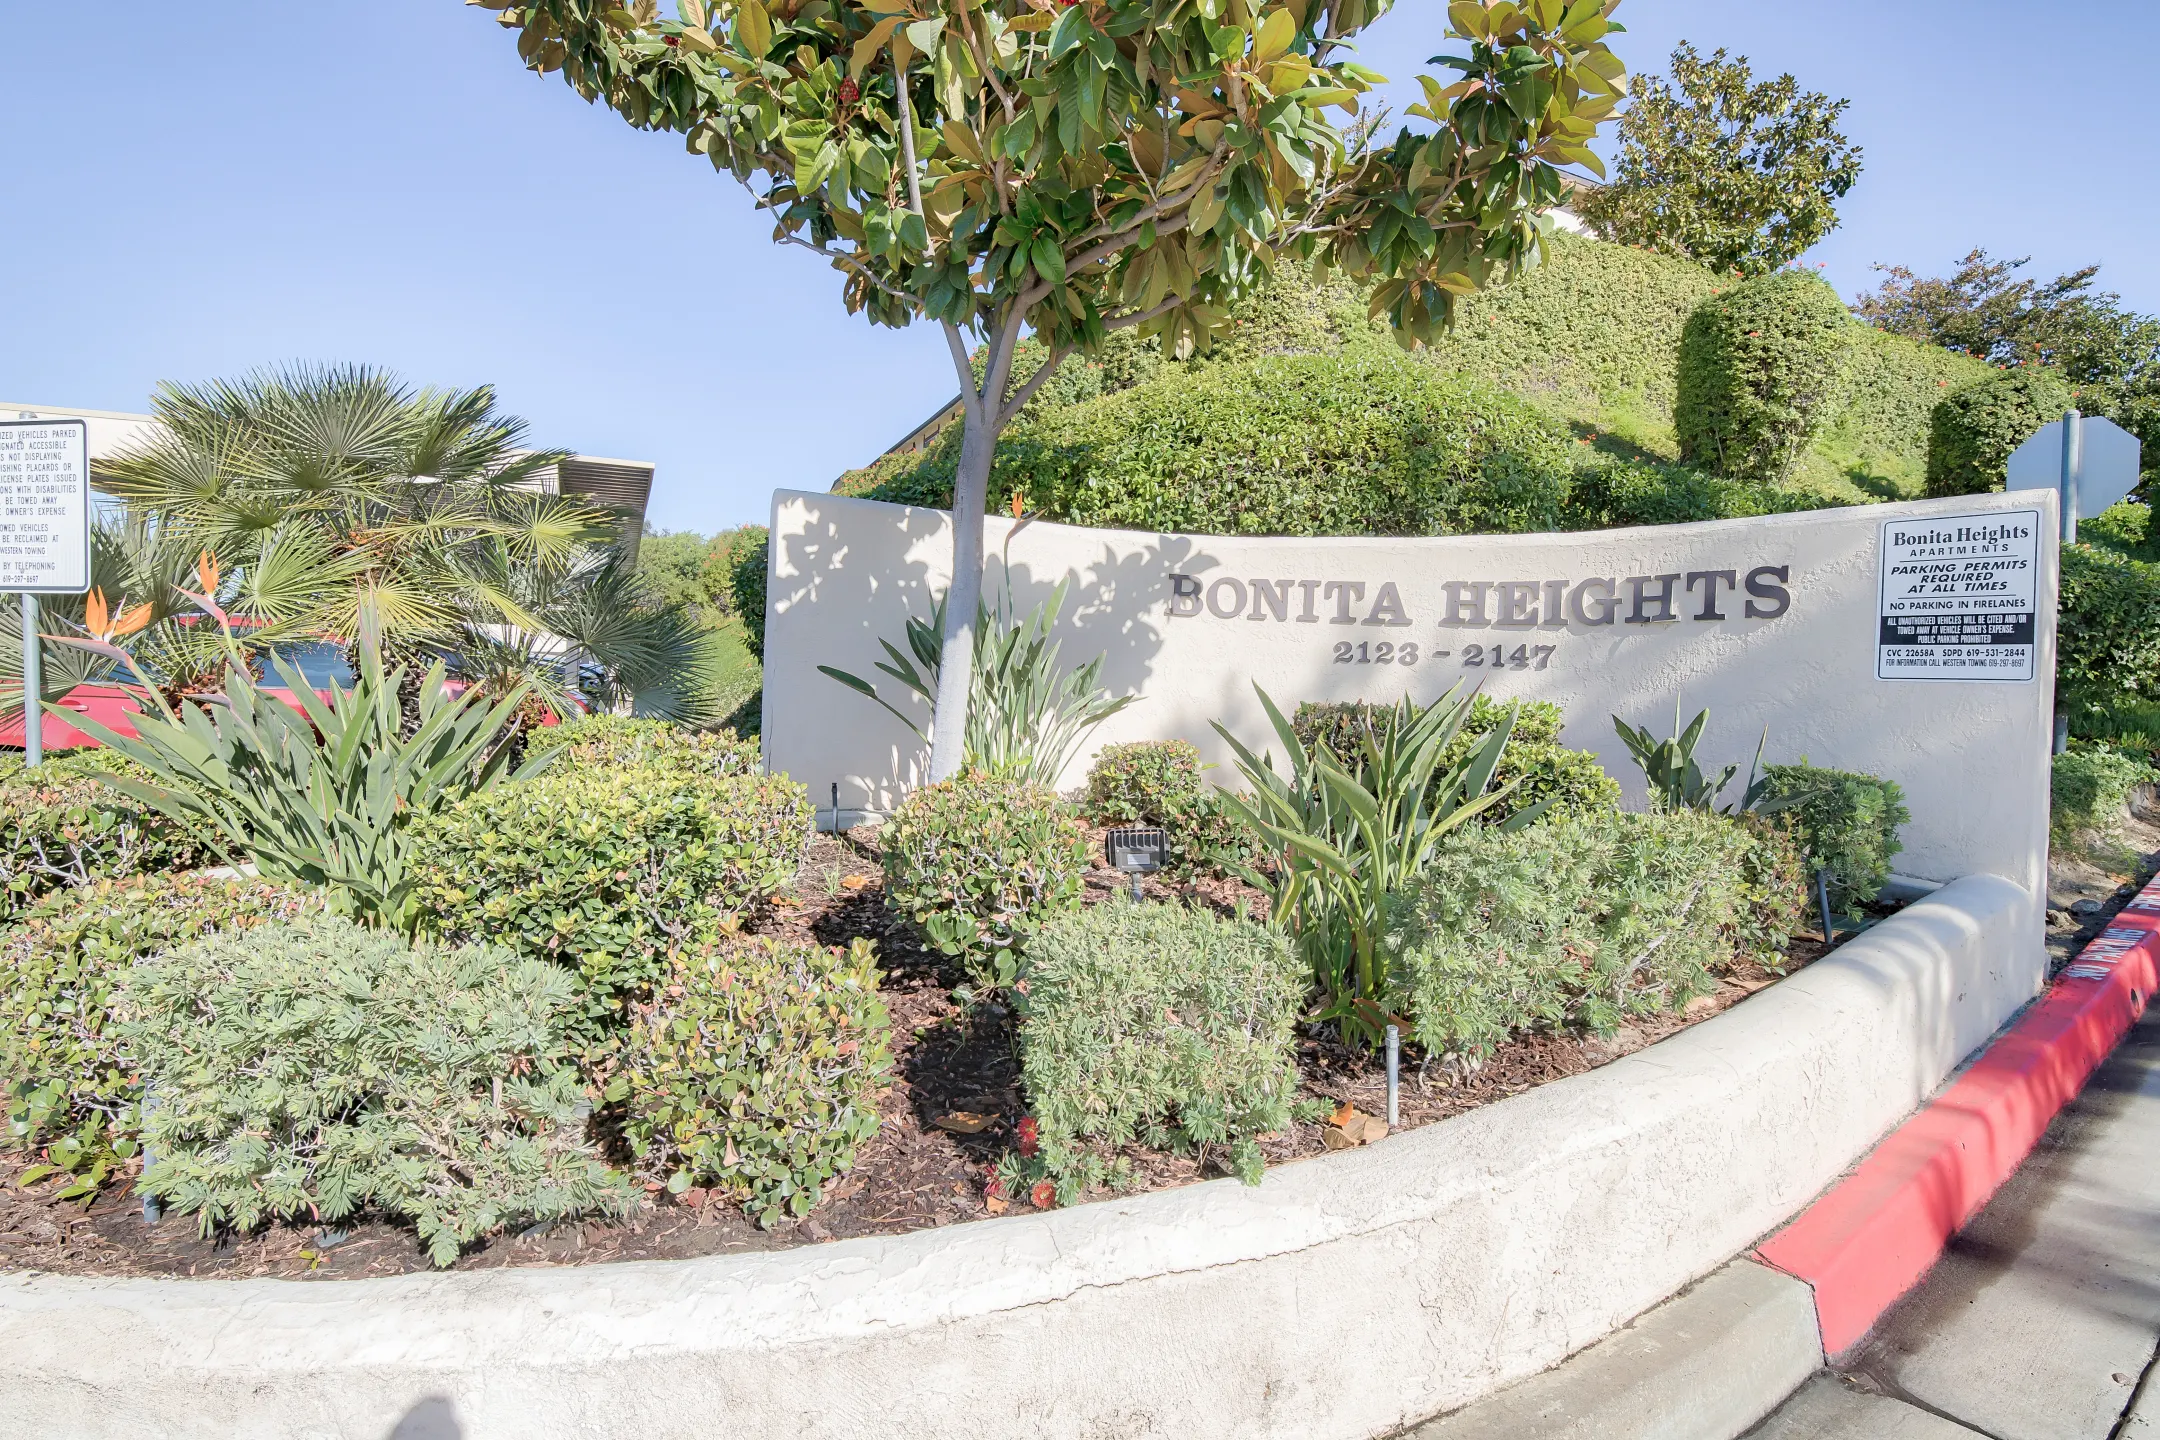 Villa Bonita - San Diego, CA